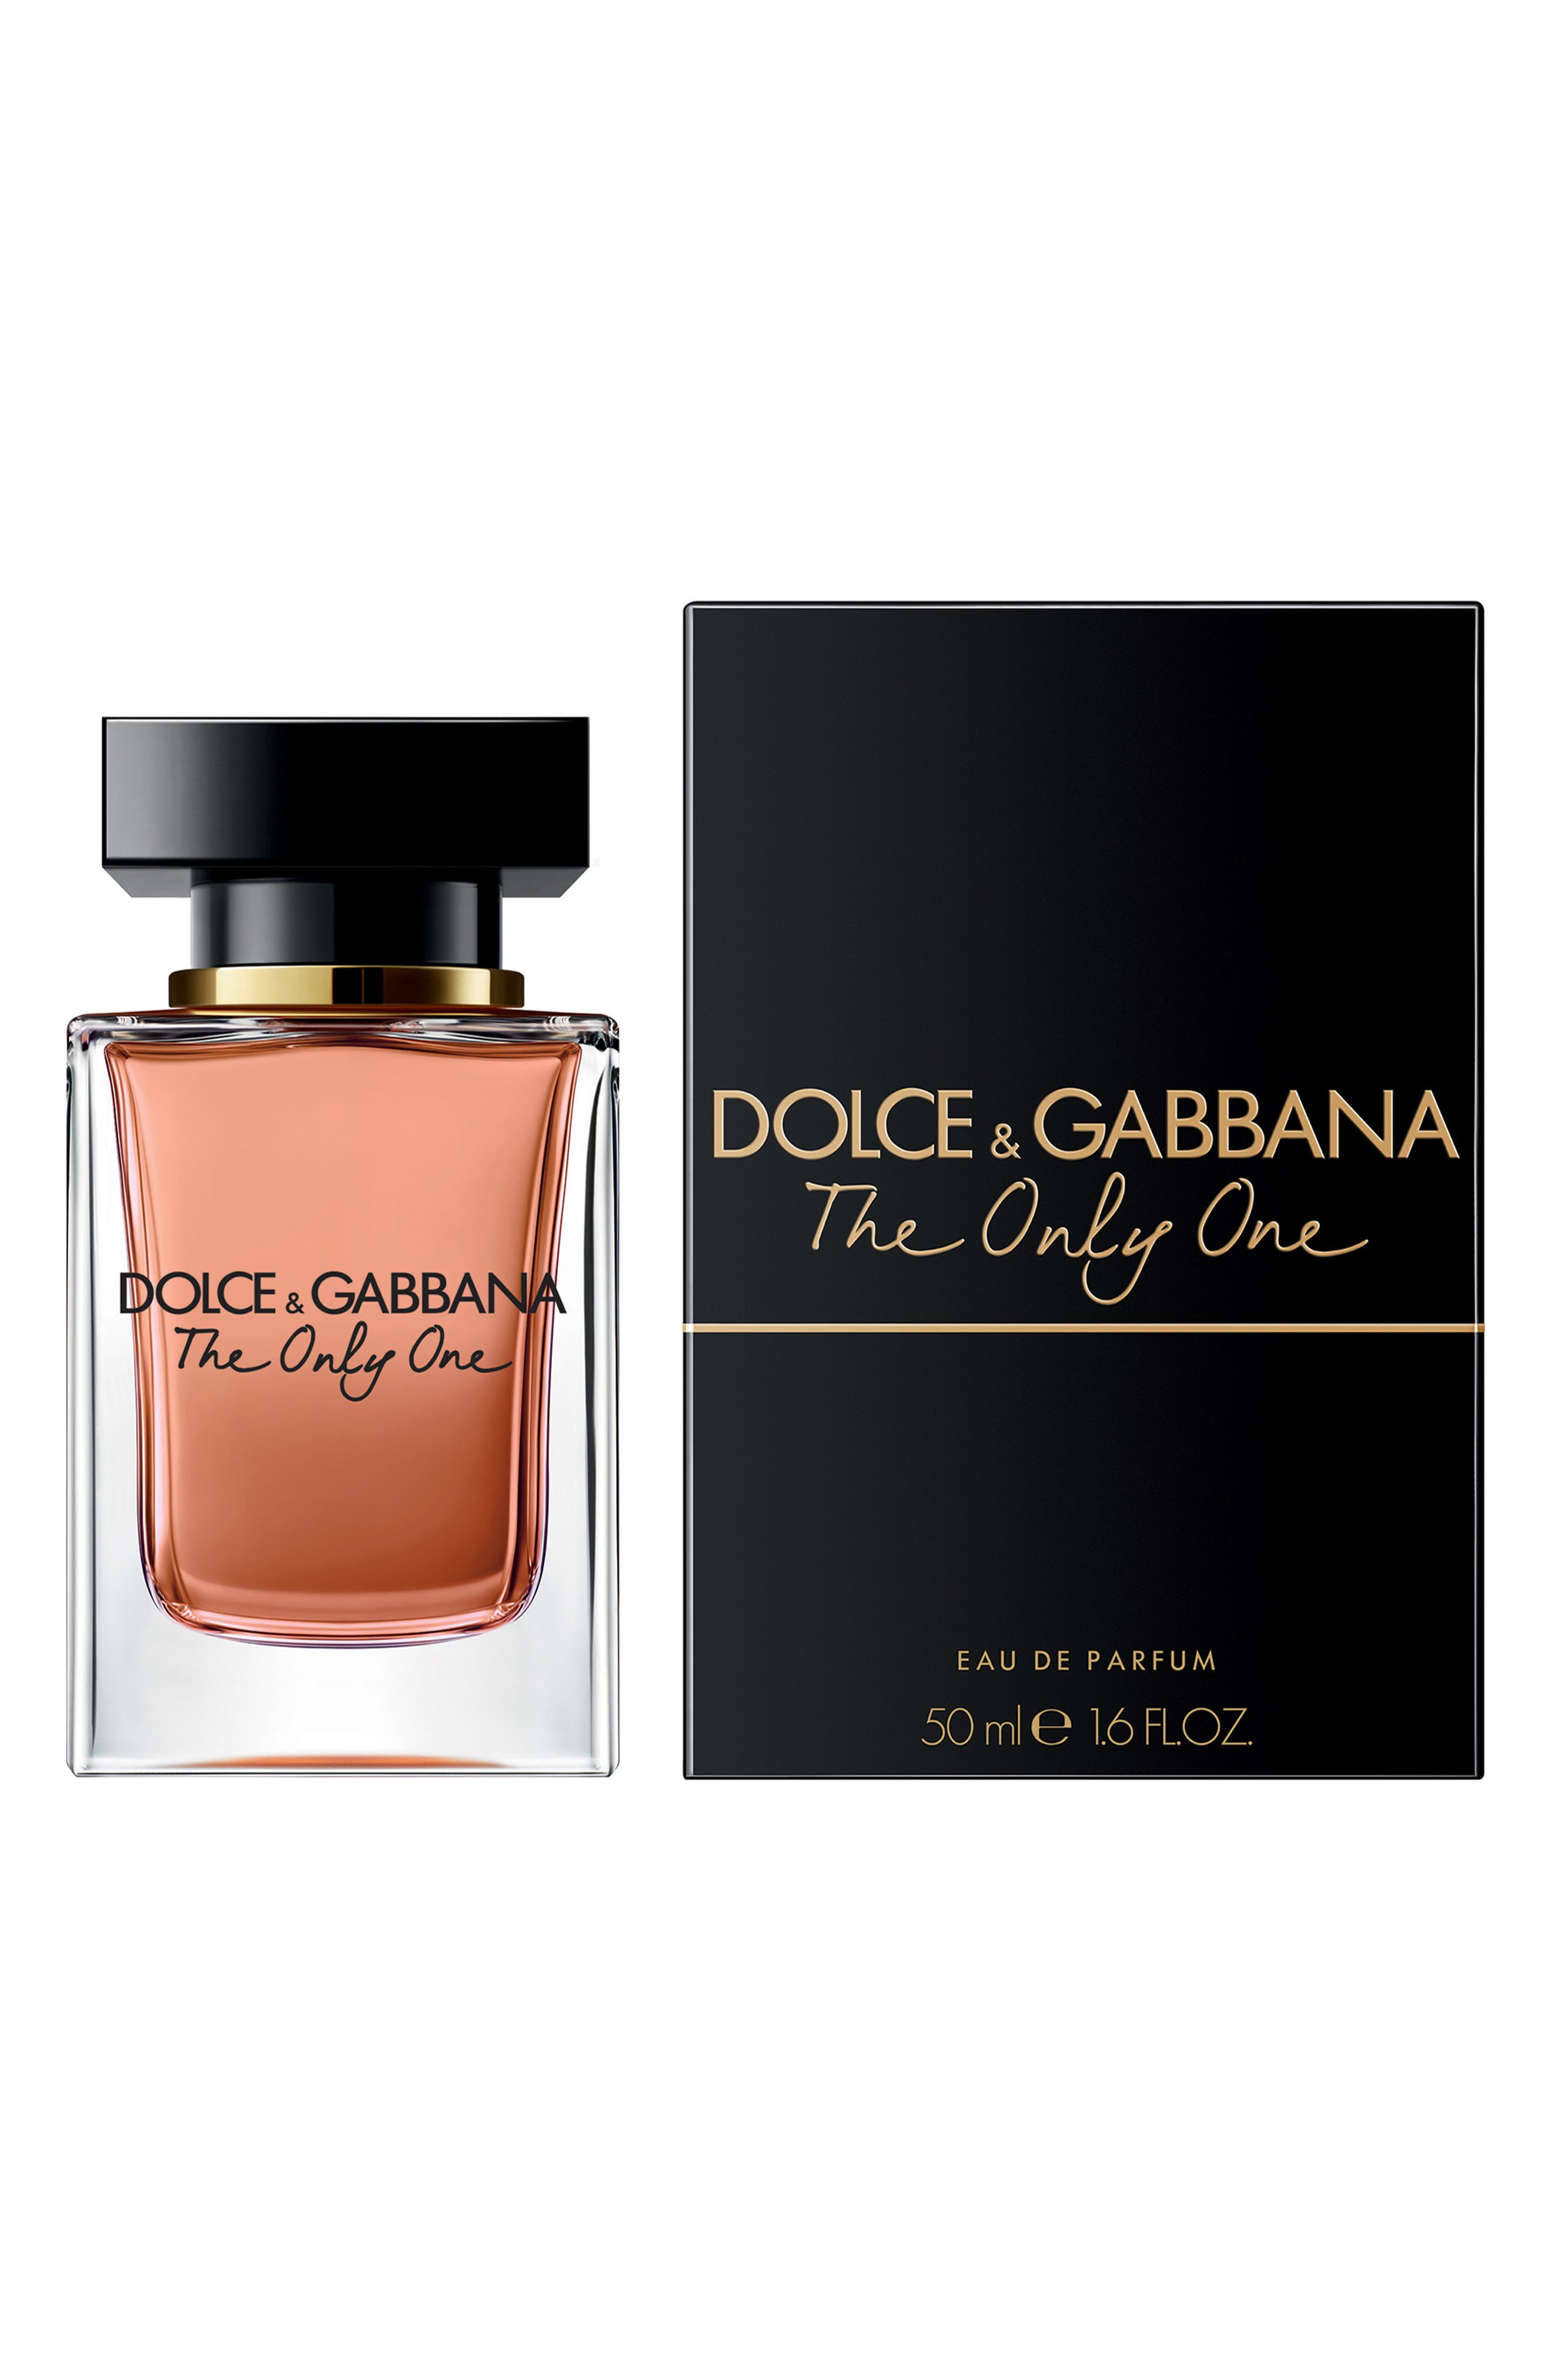 EAN 3423478452657 product image for Dolce & gabbana Beauty The Only One Eau De Parfum | upcitemdb.com